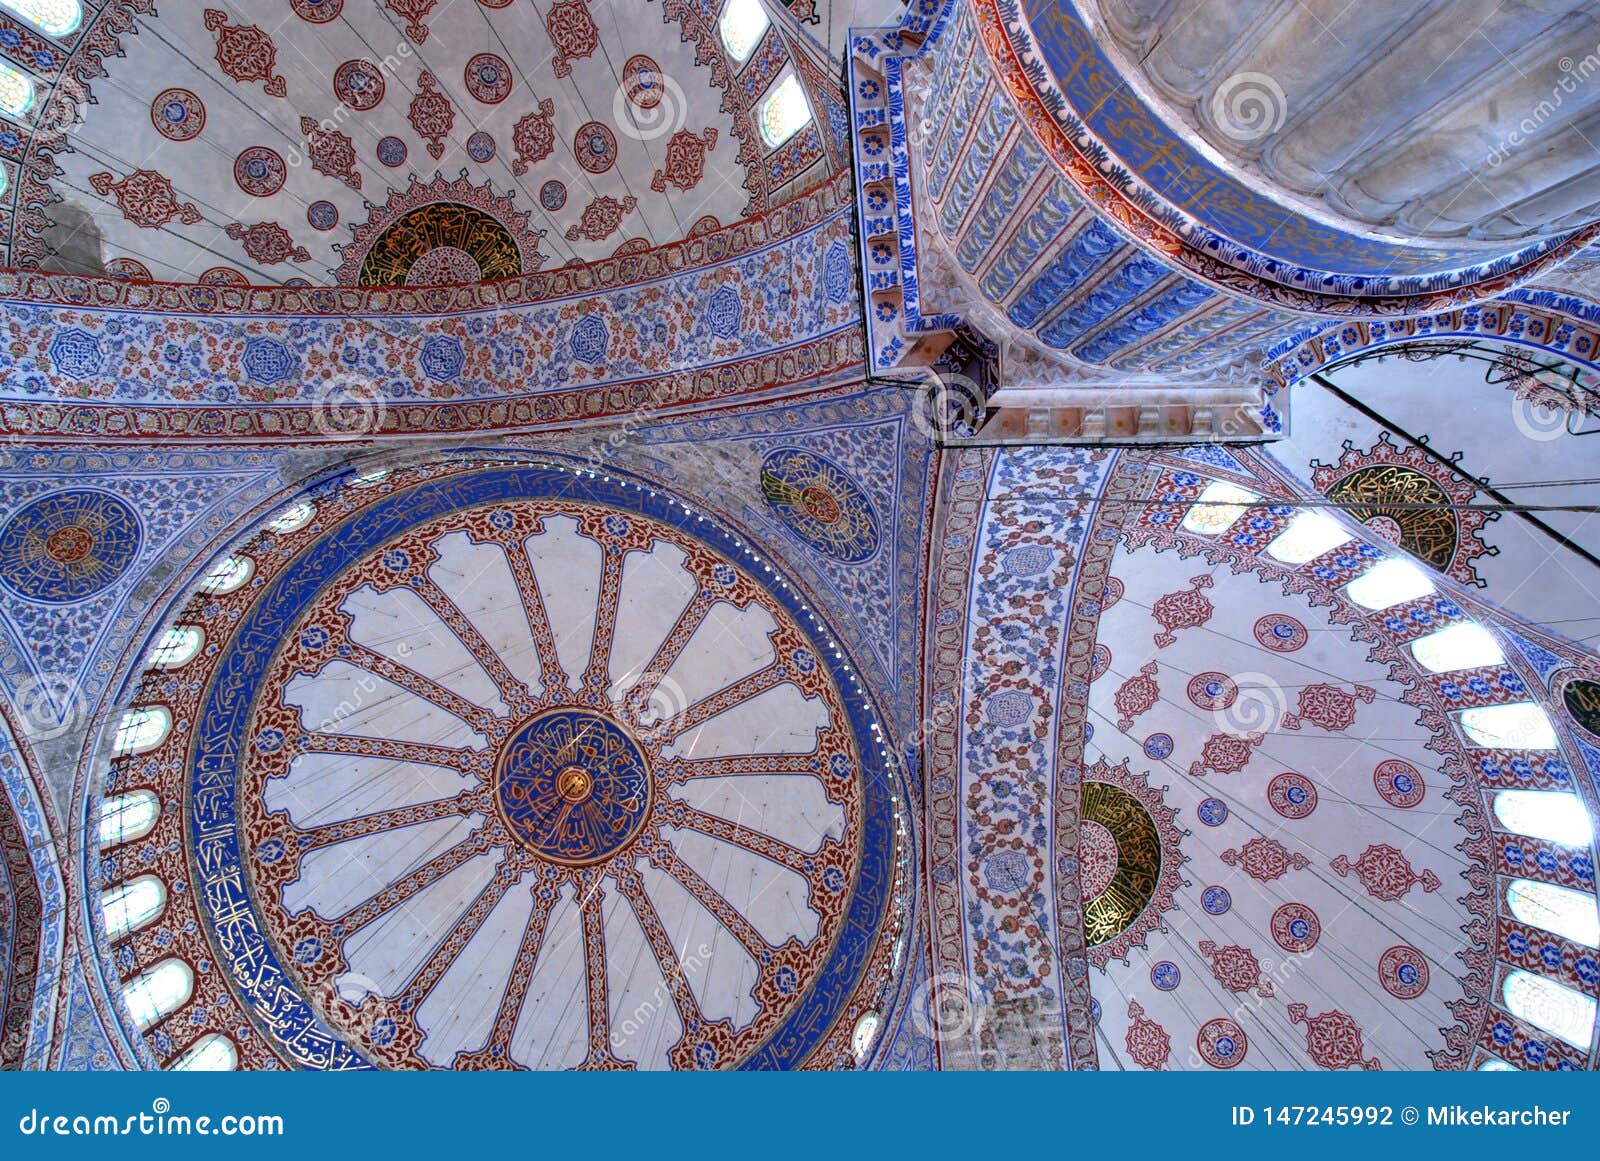 fresco inside blue mosque in istanbul